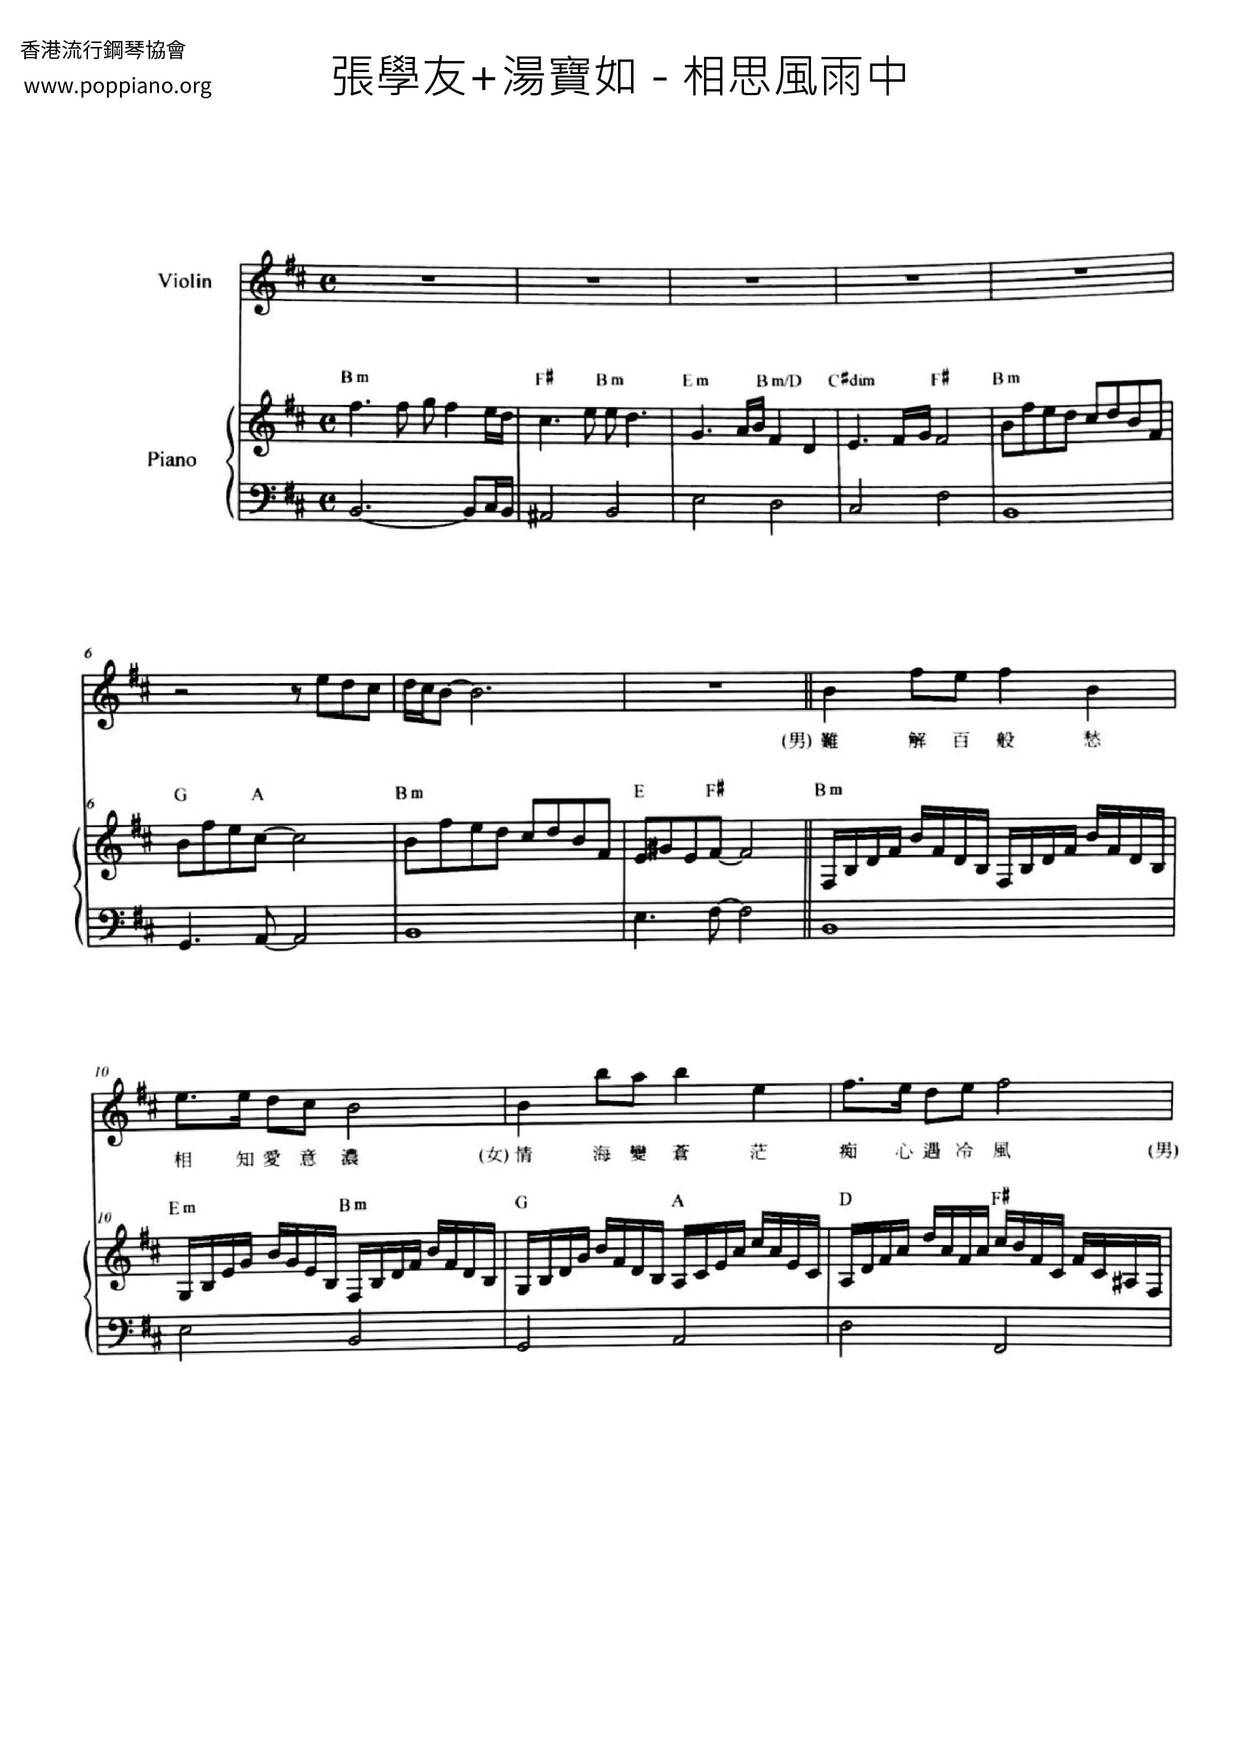 ☆ 相思風雨中All Versions - Sheet Music / Piano Score Free PDF 